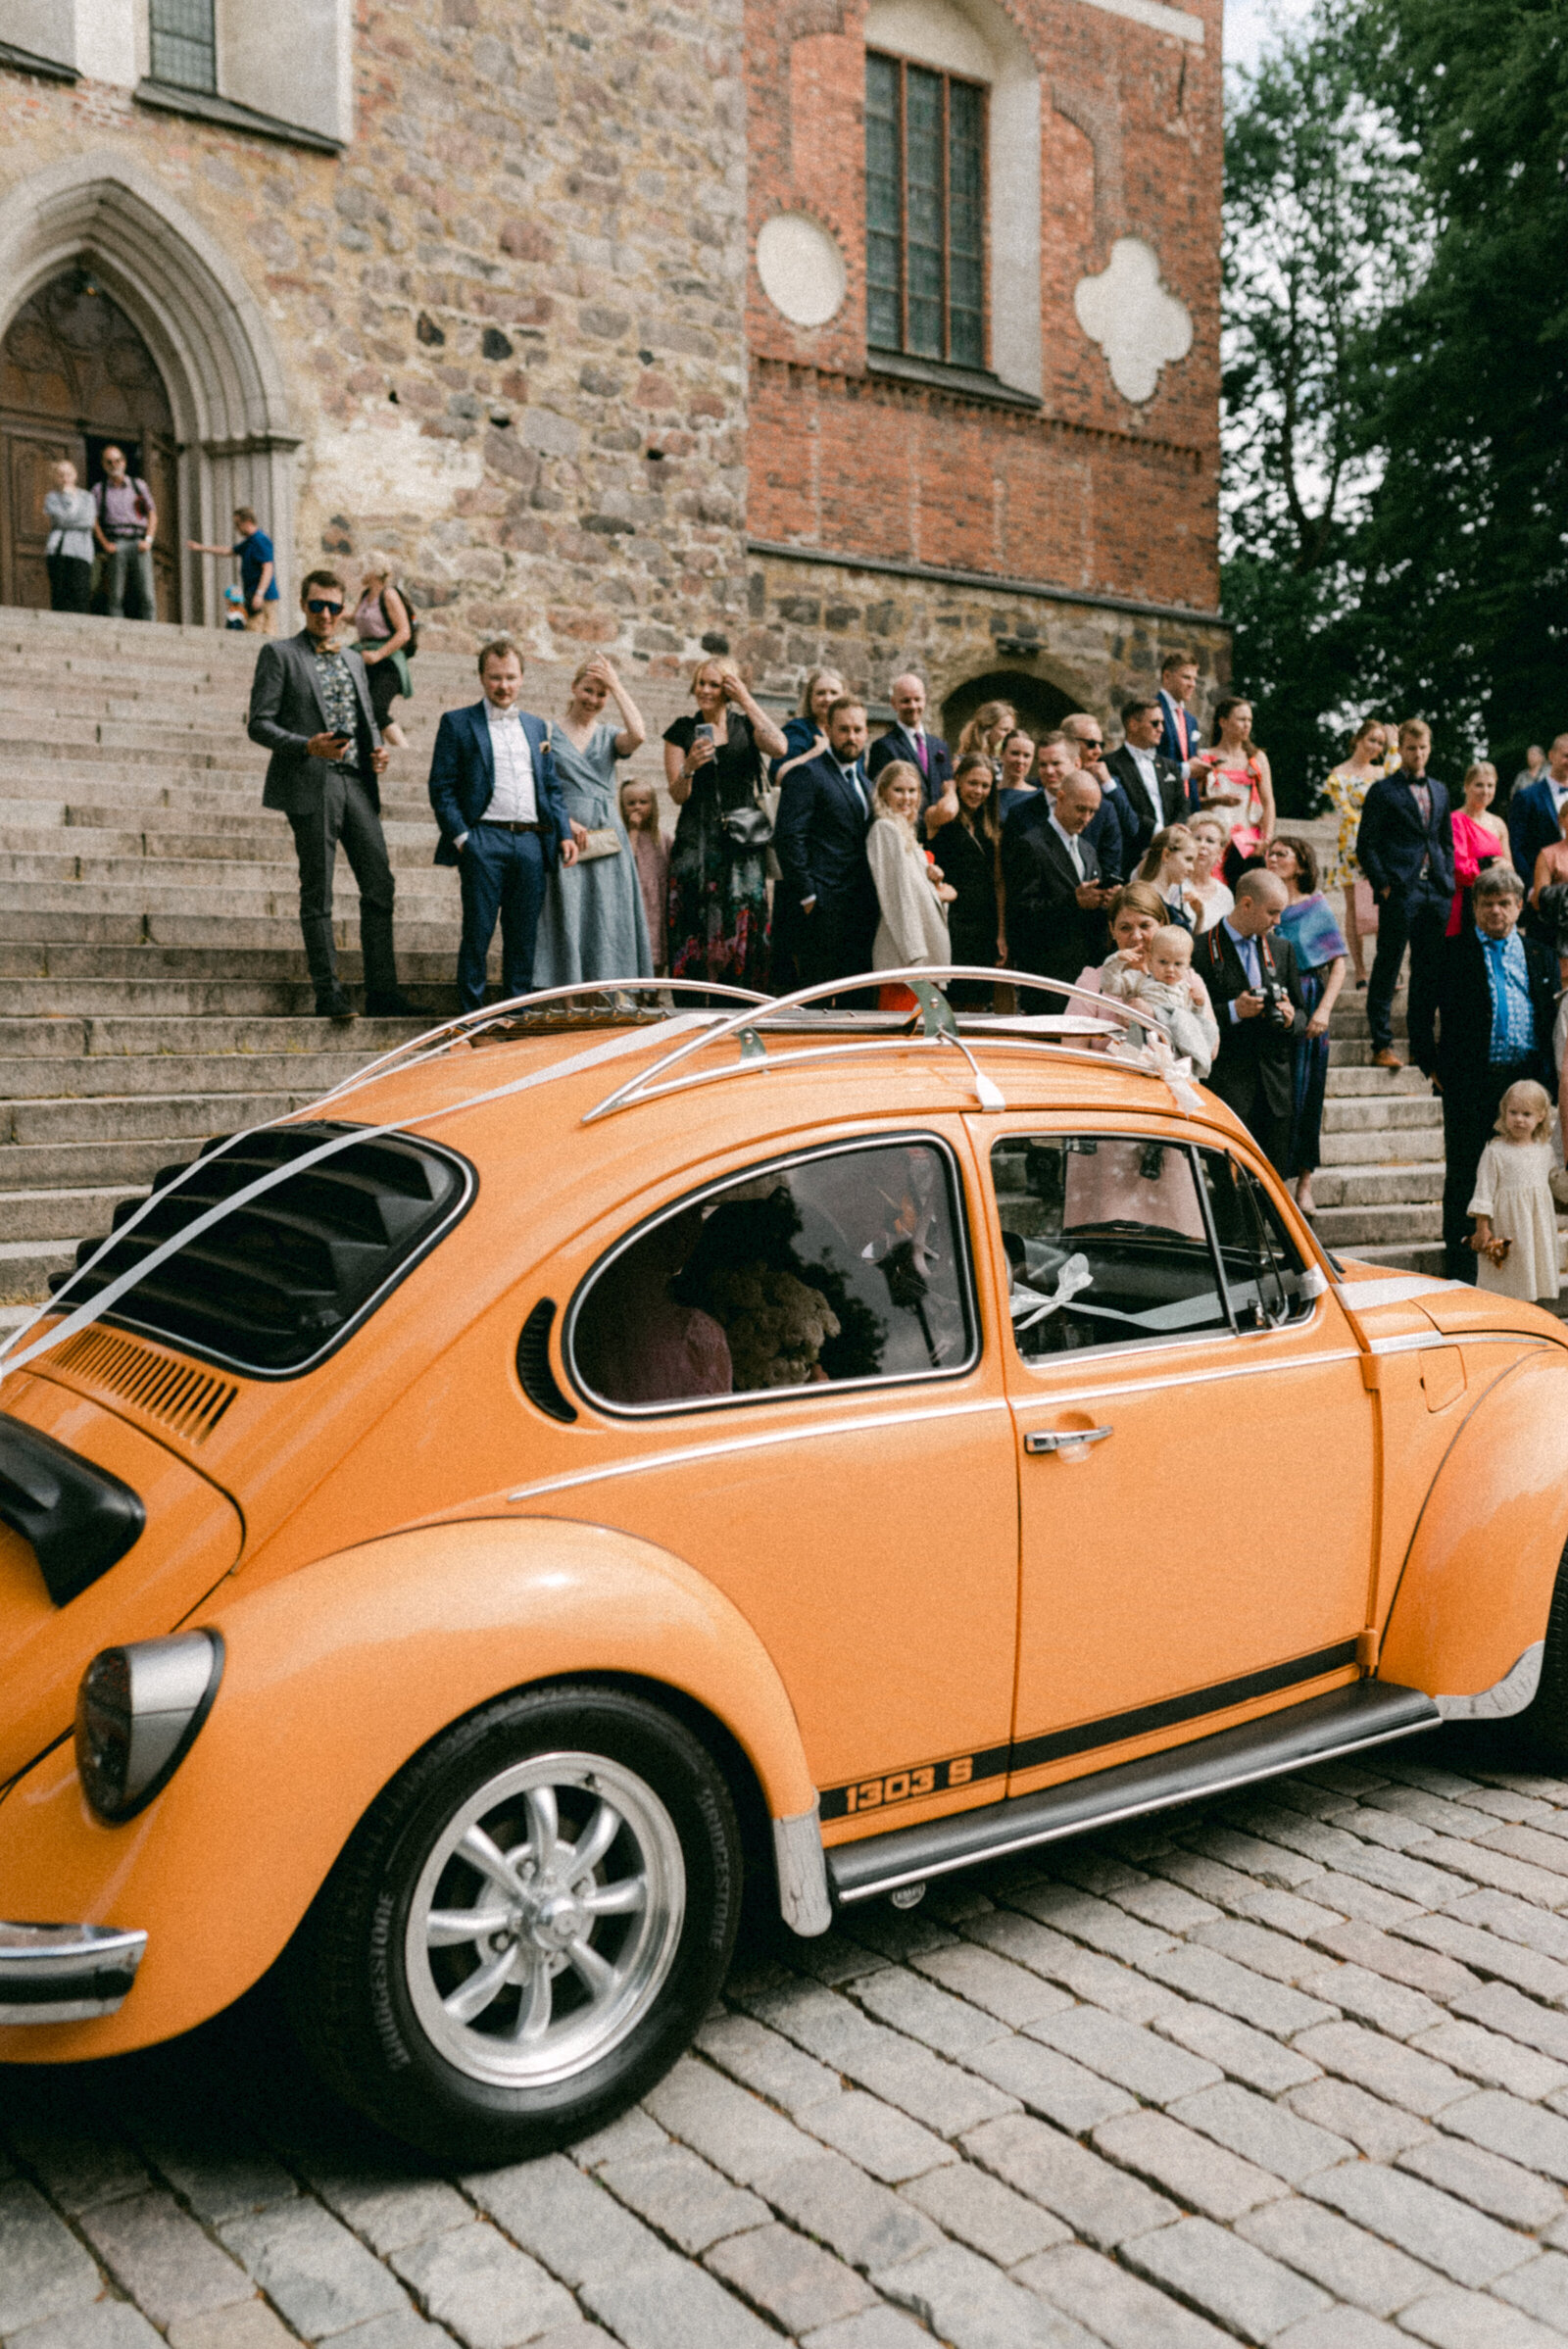 Wedding car, orange volkswagen beetle in front of Turku cathedral after wedding ceremony. Documentary image captured by wedding photographer Hannika Gabrielsson